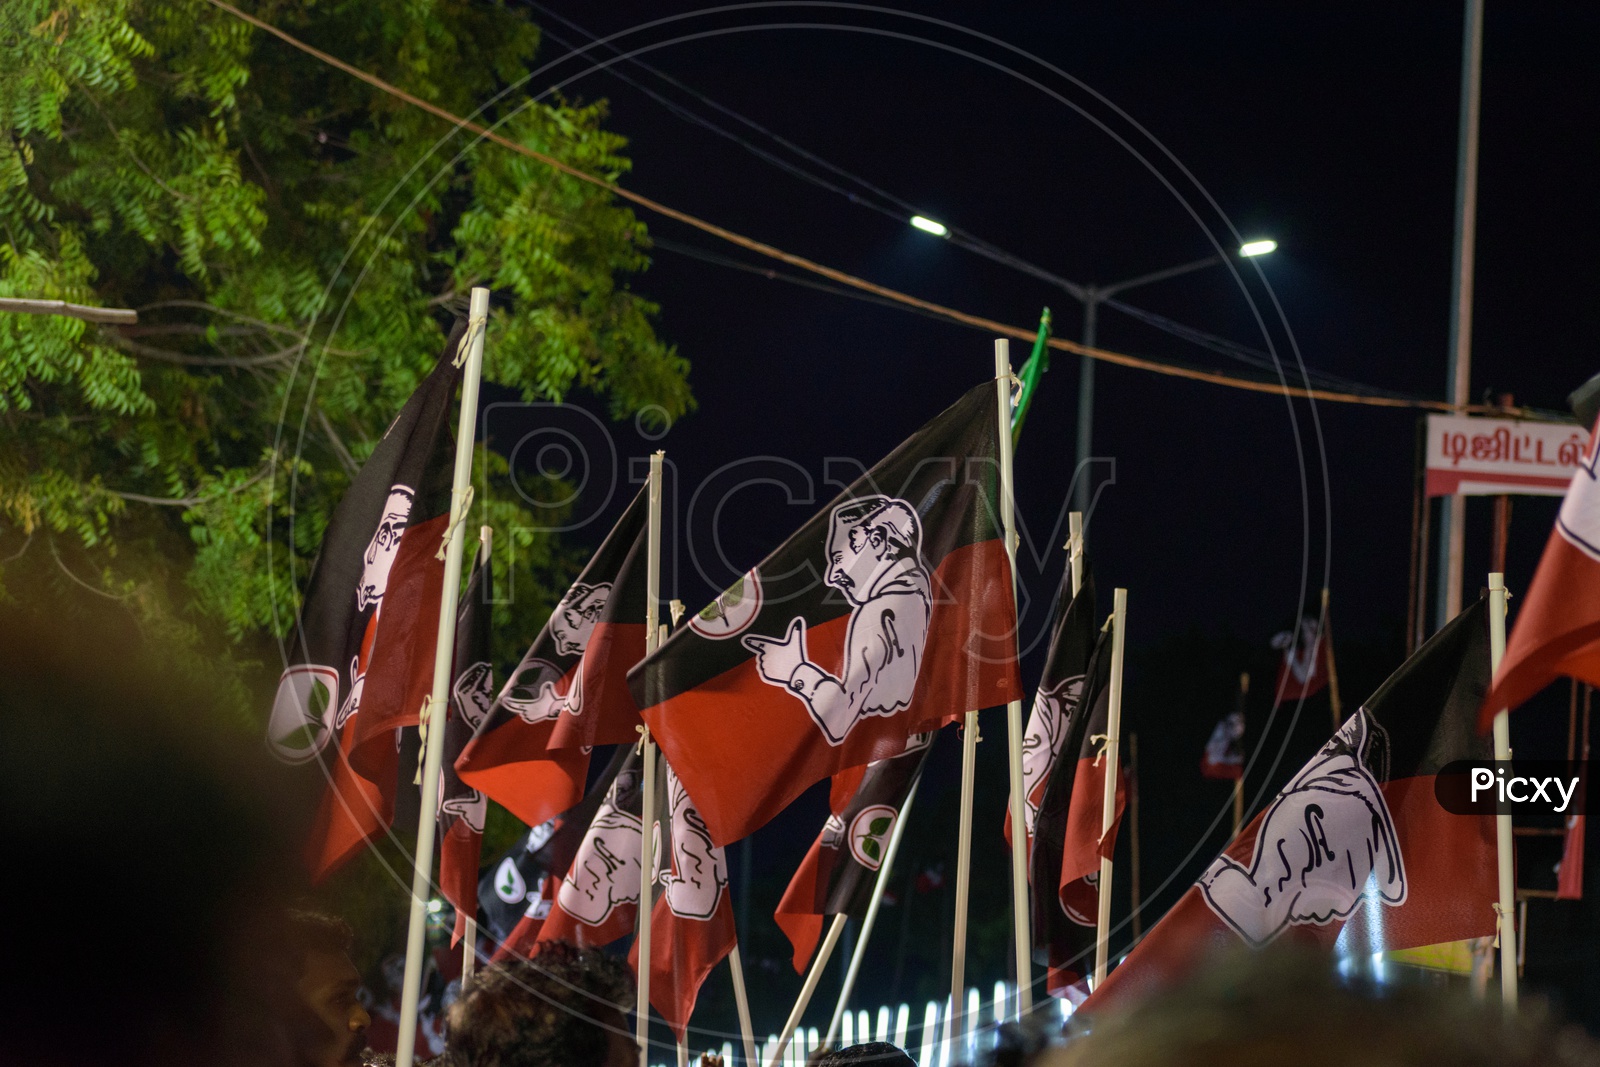 ADMK Party cadres with ADMK Flag for loksabha election compaign 2019